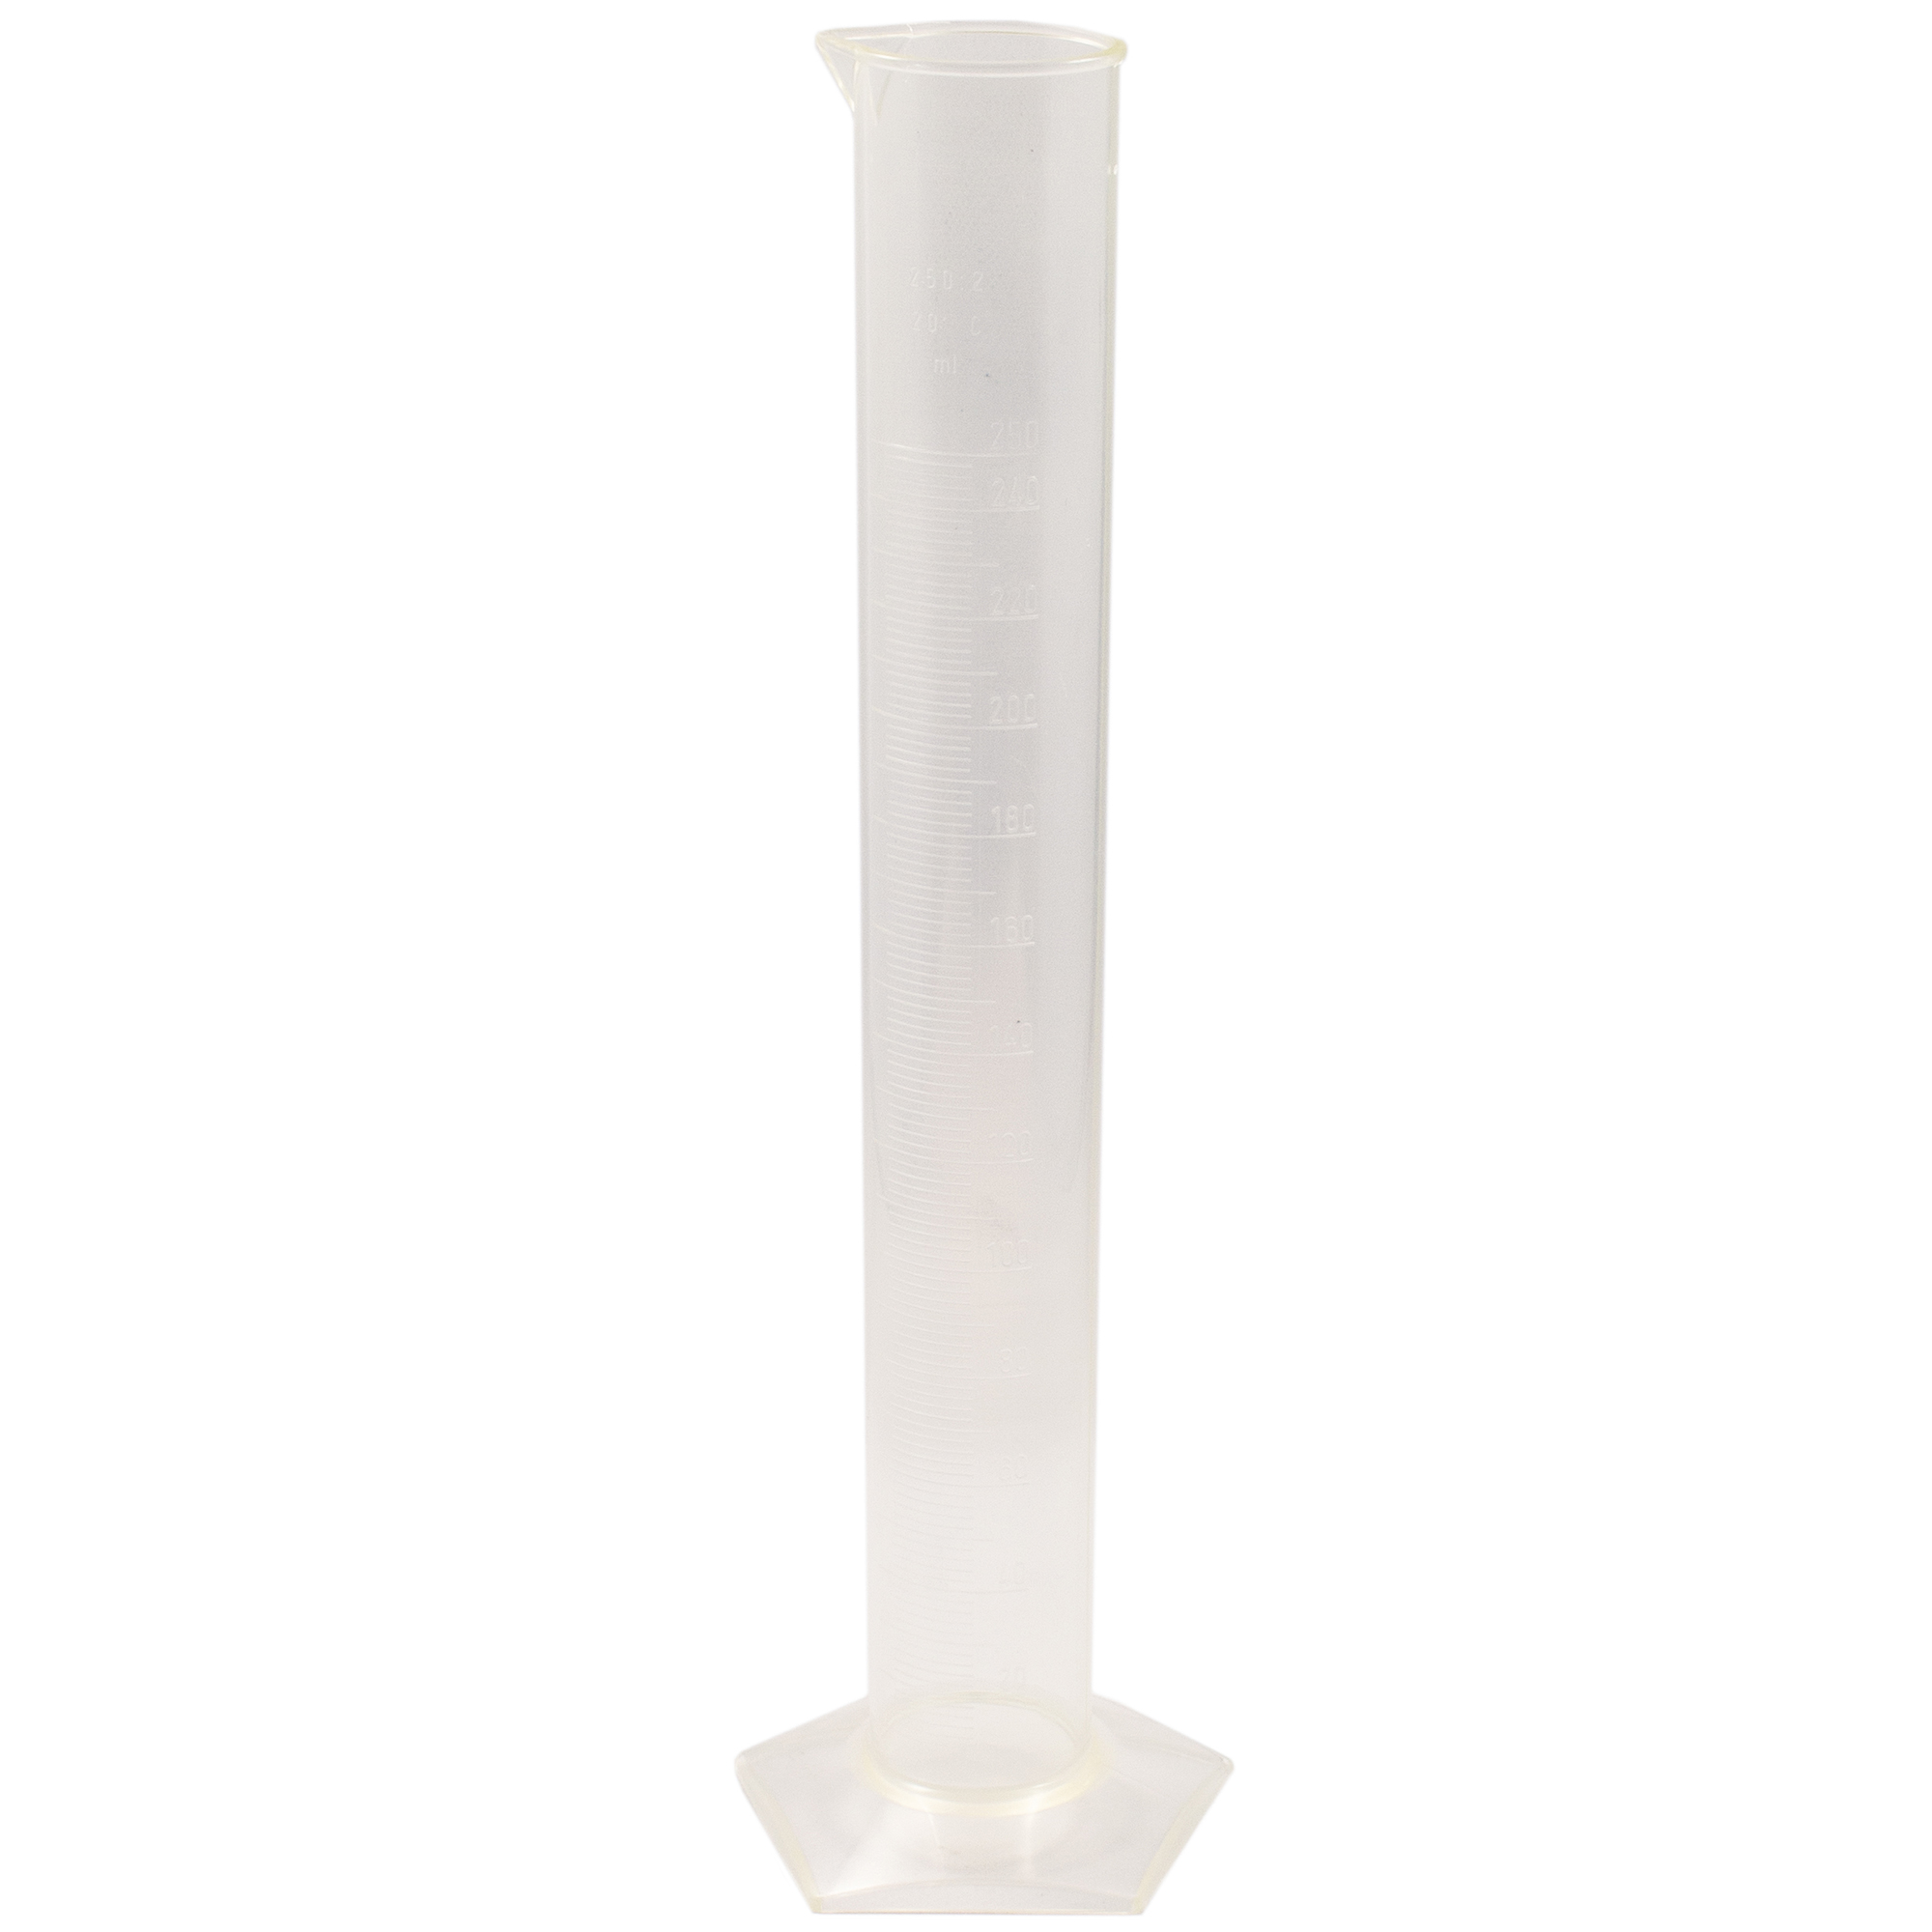 Measuring cylinder plastic (tpx) - 500ml